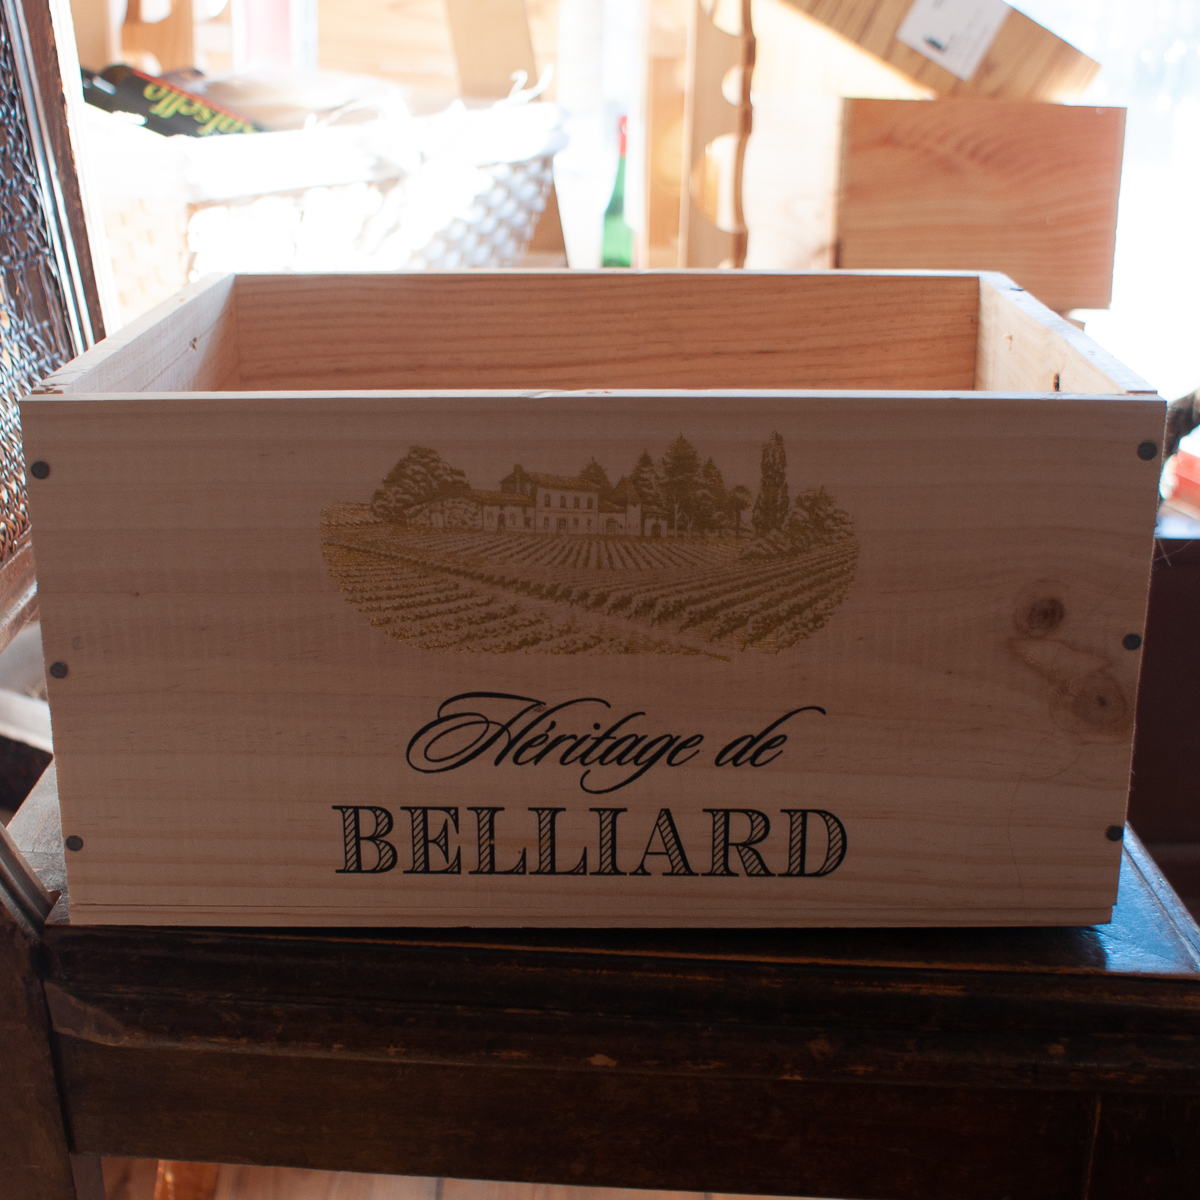 6er Box Heritage de Belliard